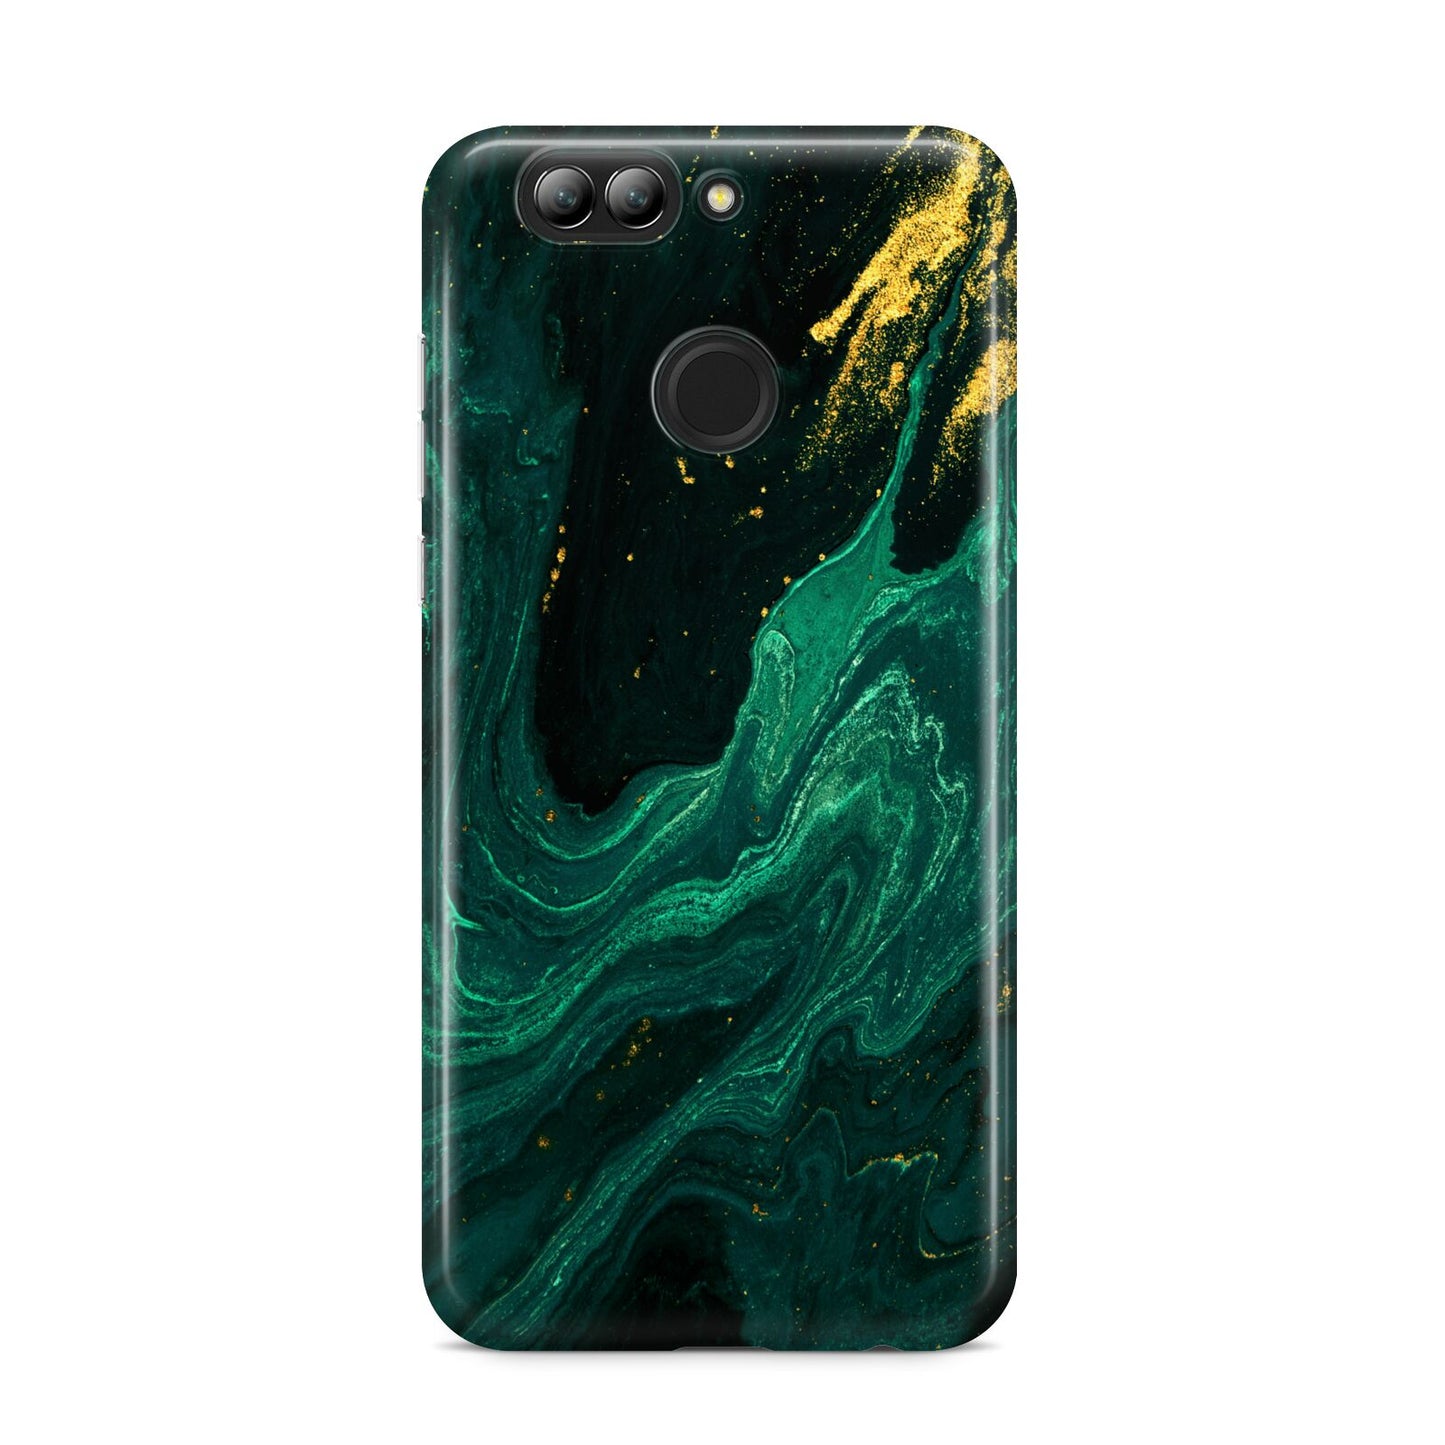 Emerald Green Huawei Nova 2s Phone Case